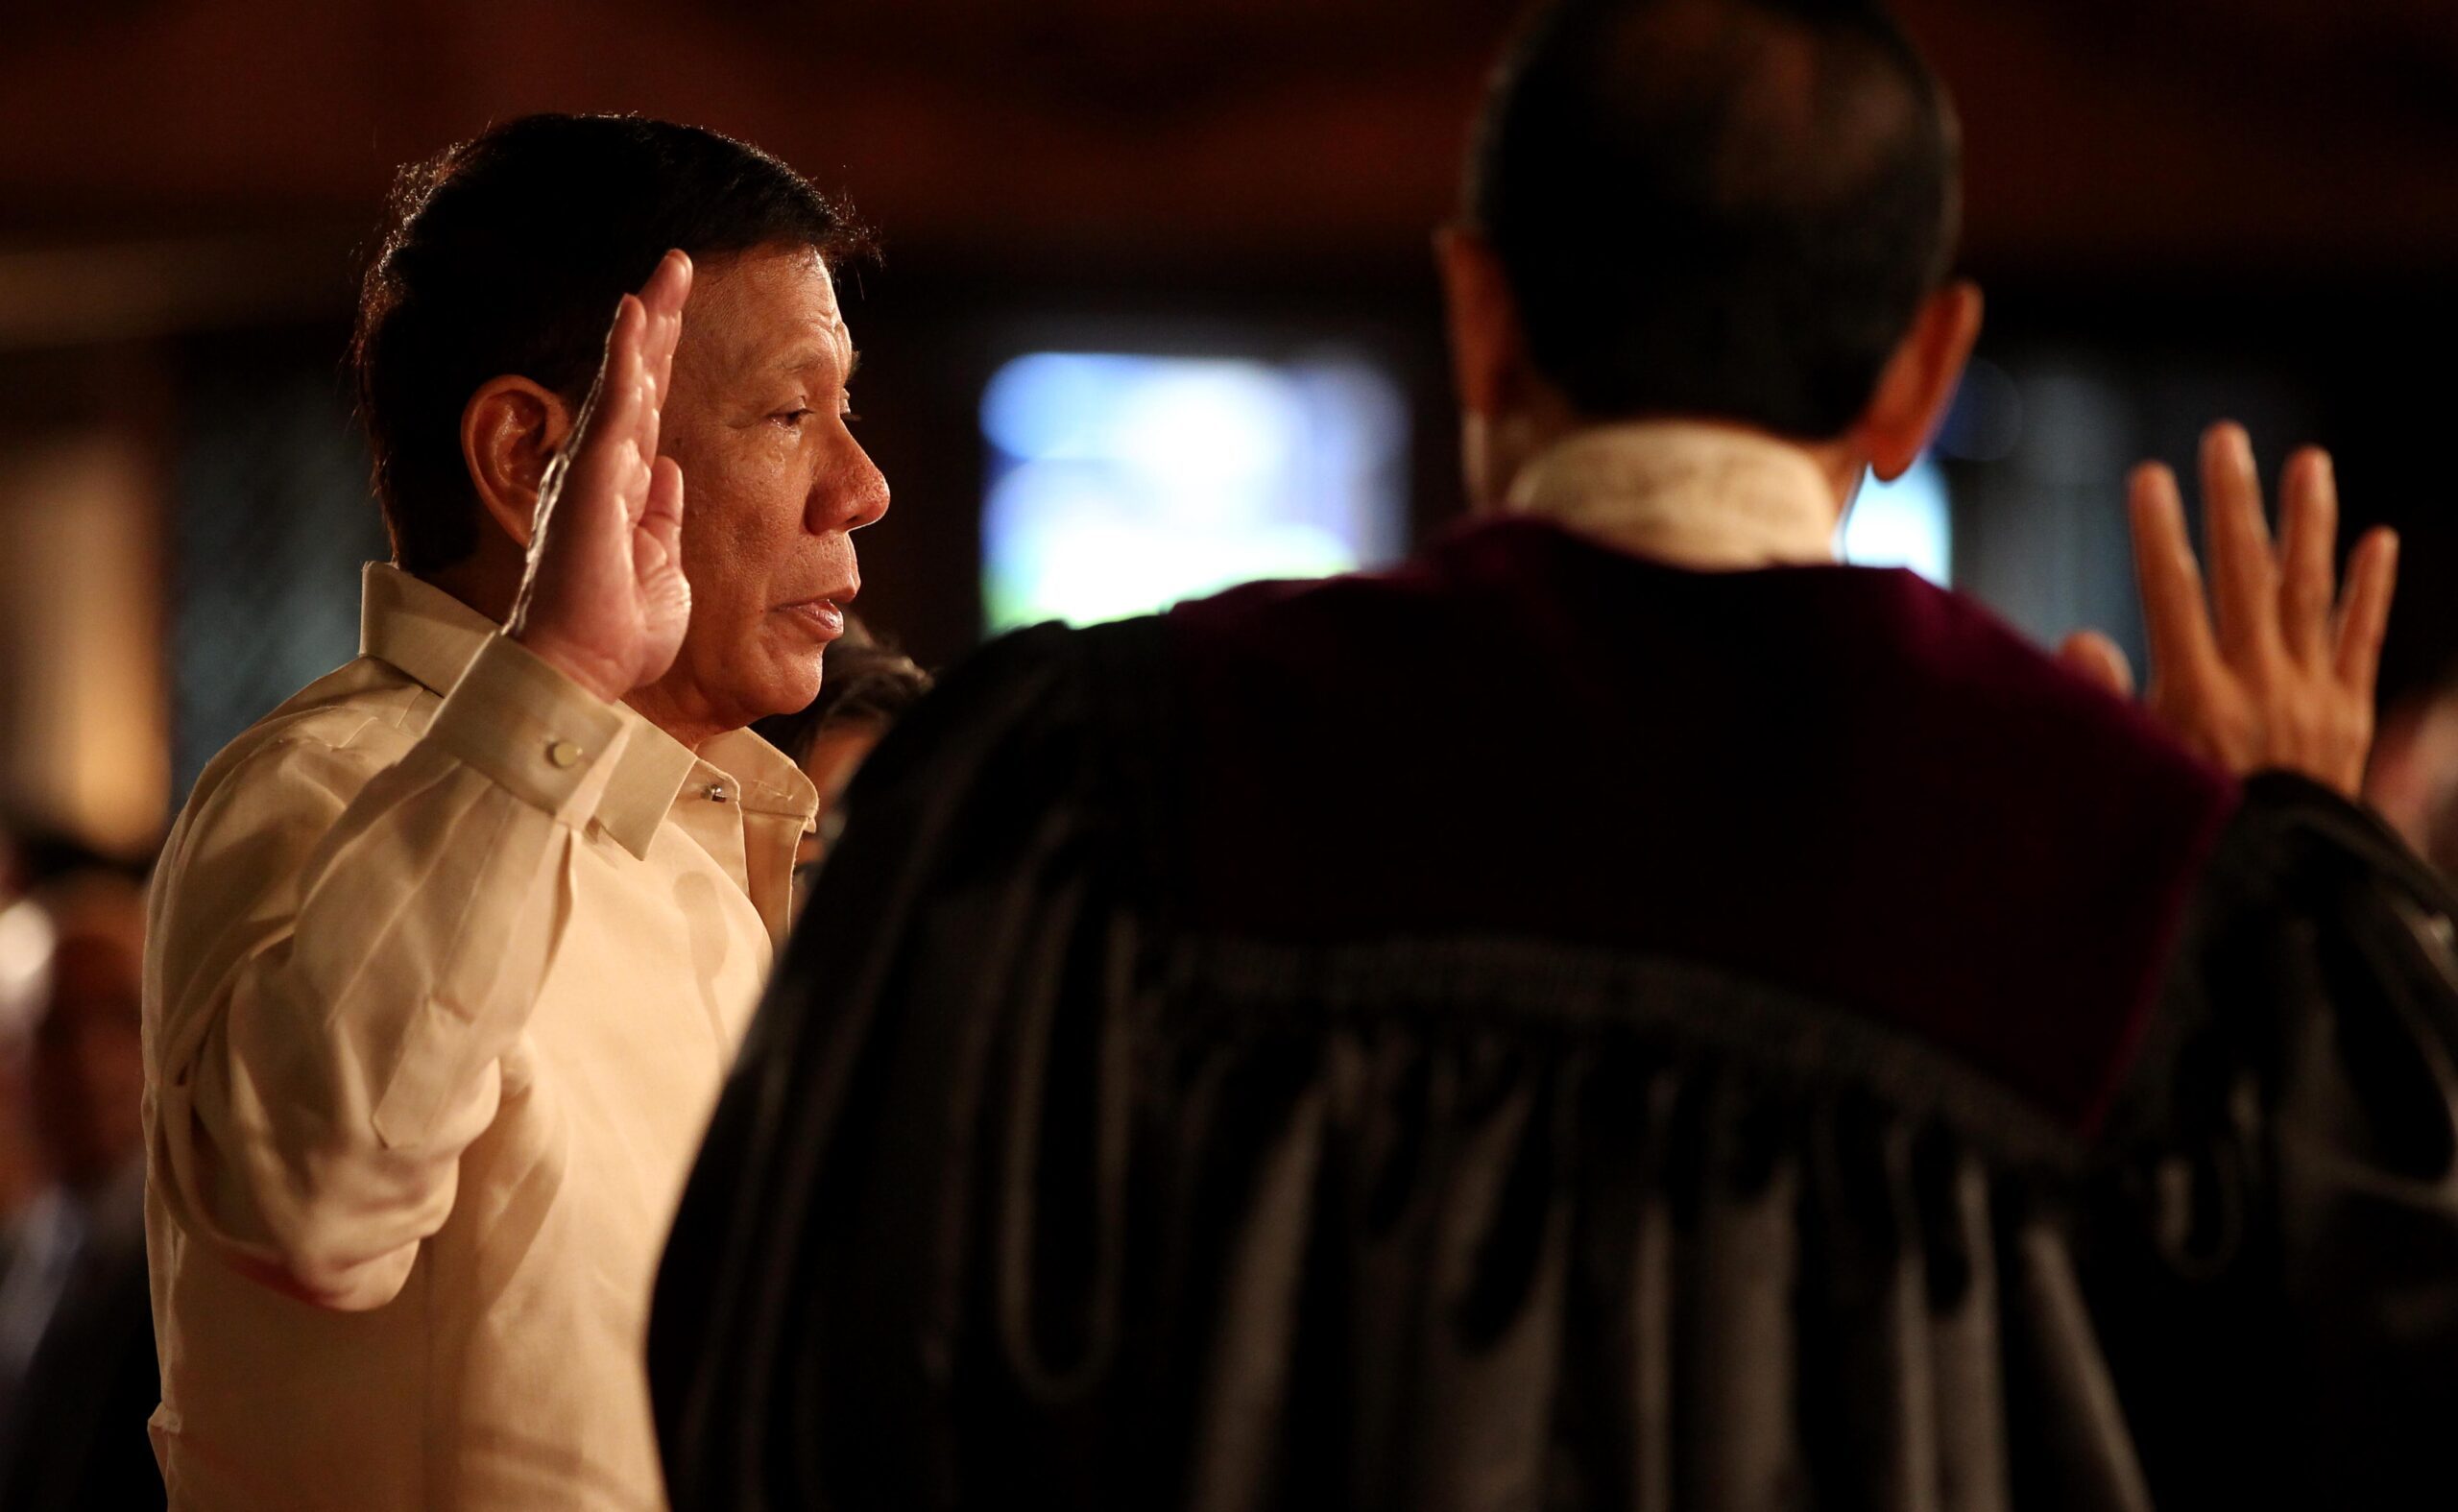 WATCH: Duterte inaugurated as Philippine president